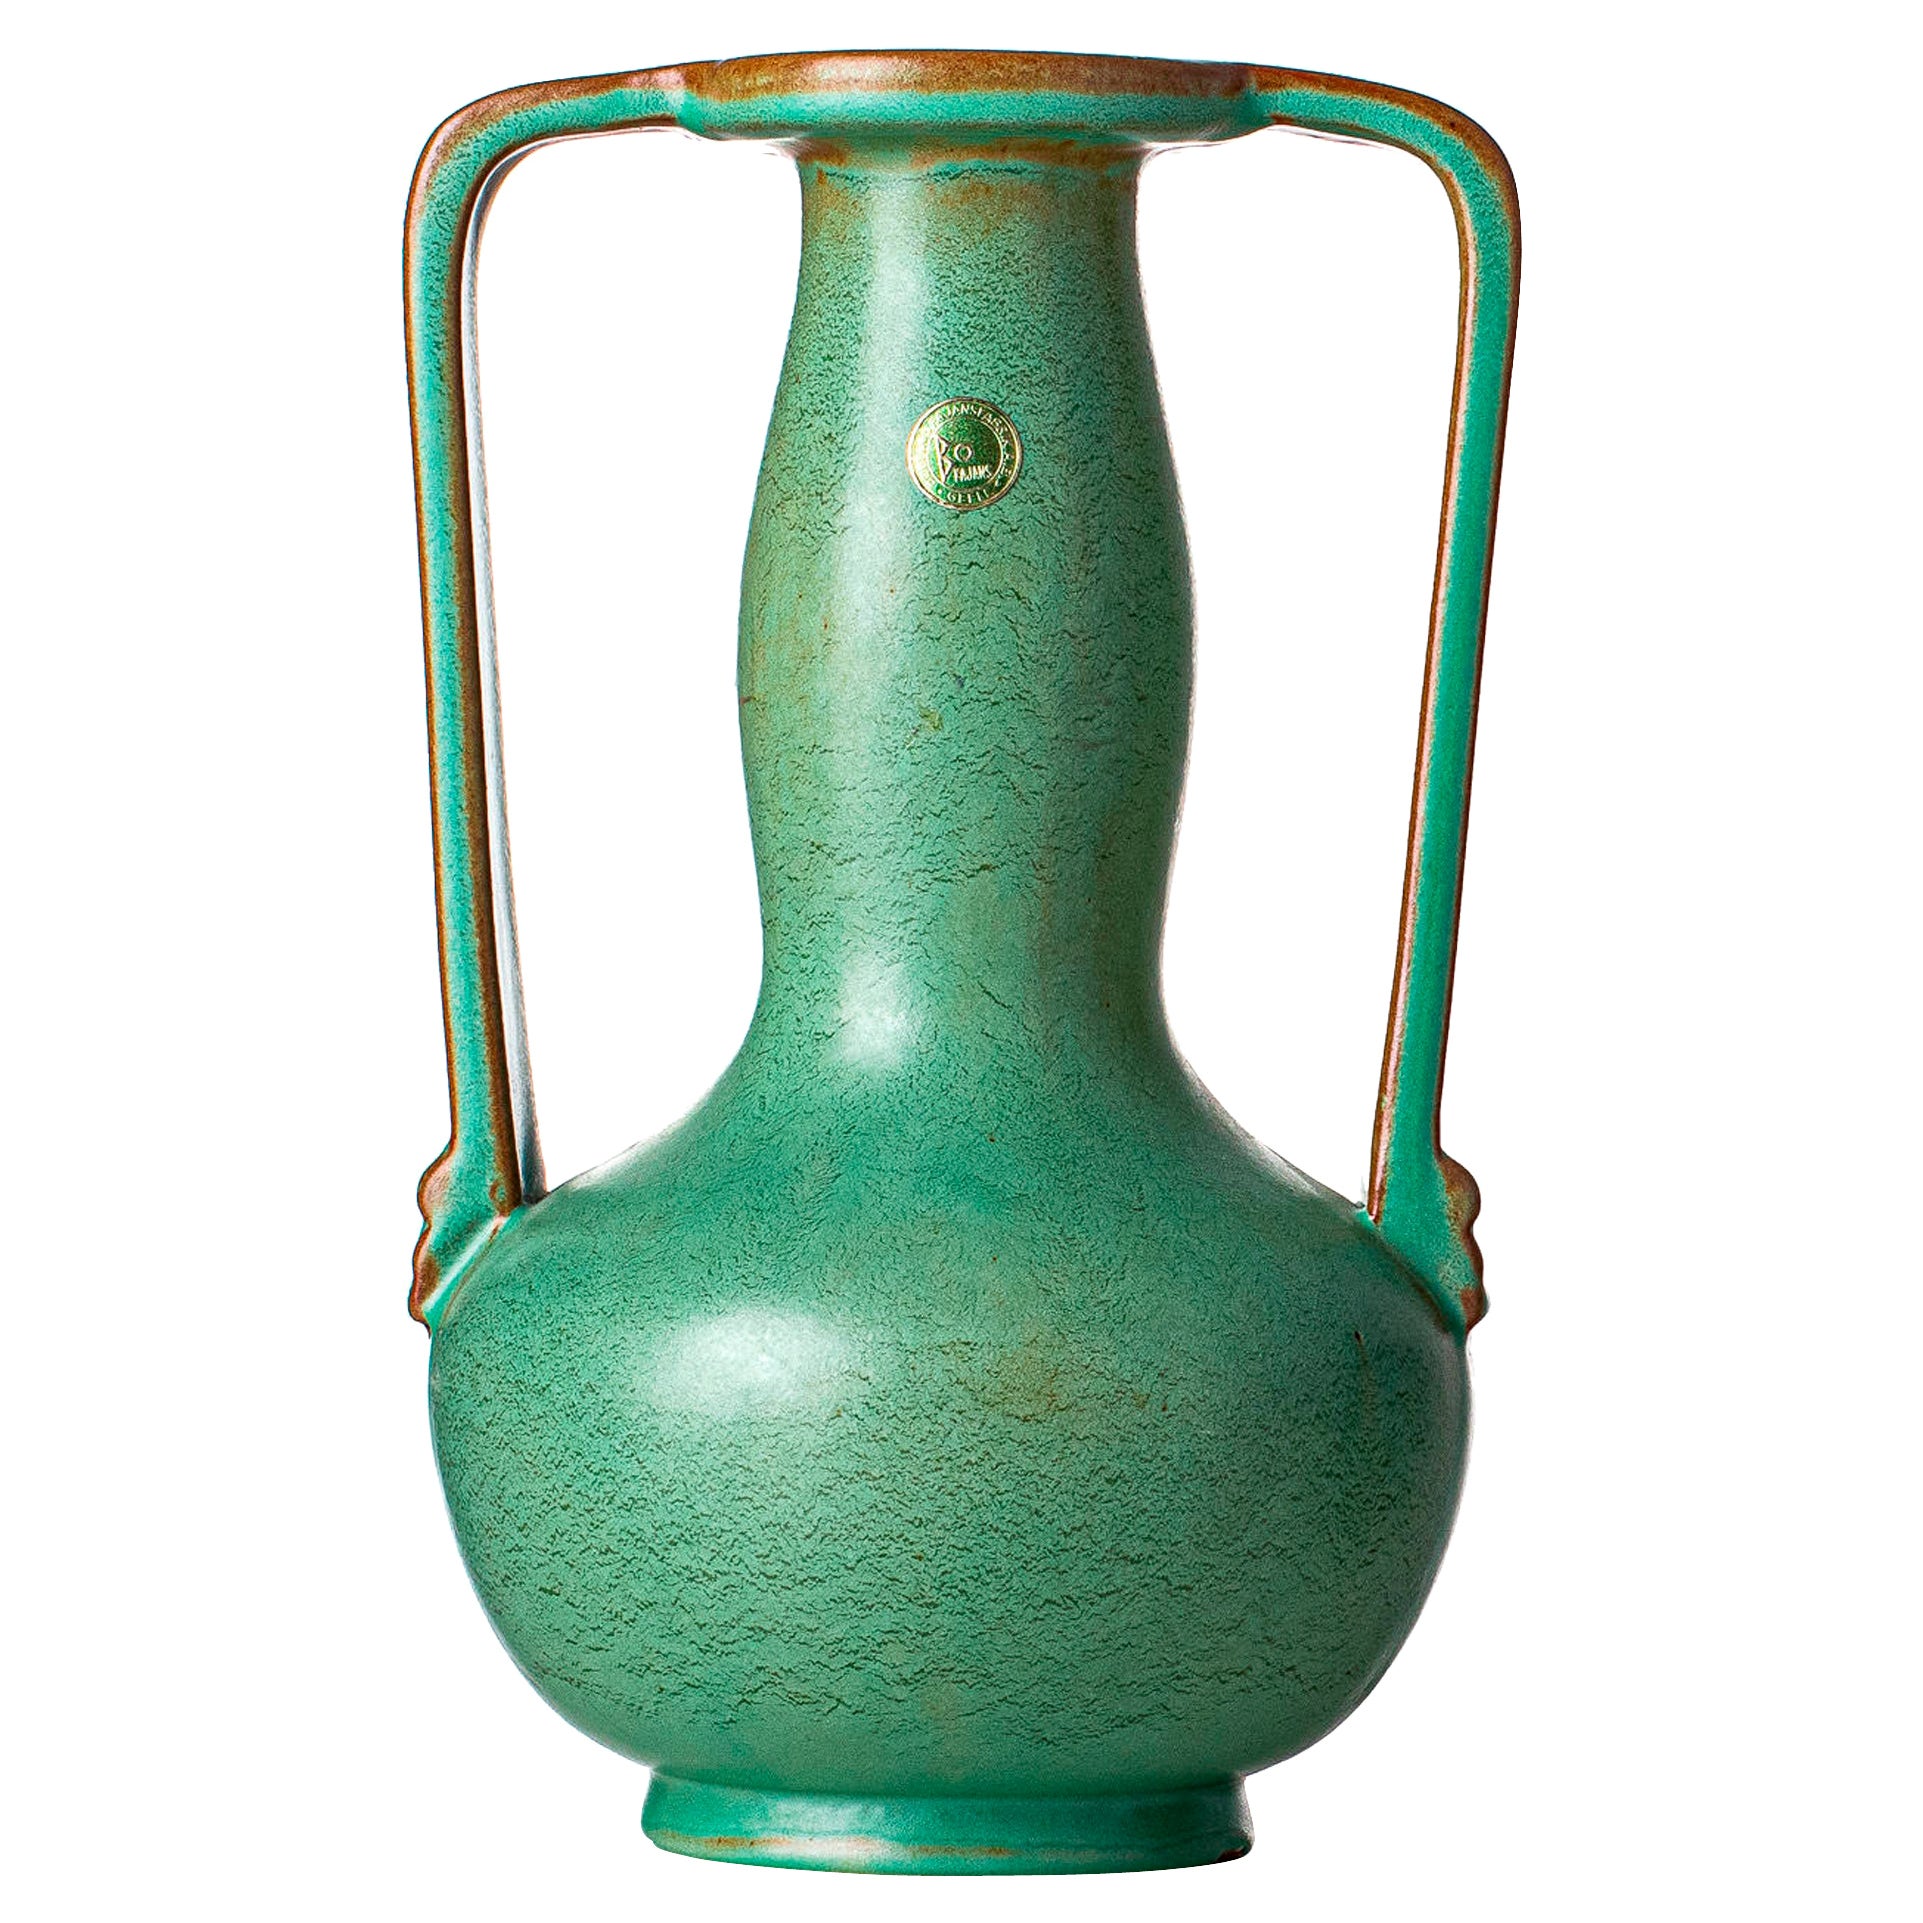 Scandinavian Modern Ewald Dahlskog Ceramic Vase Produced by Bobergs Fajansfabrik